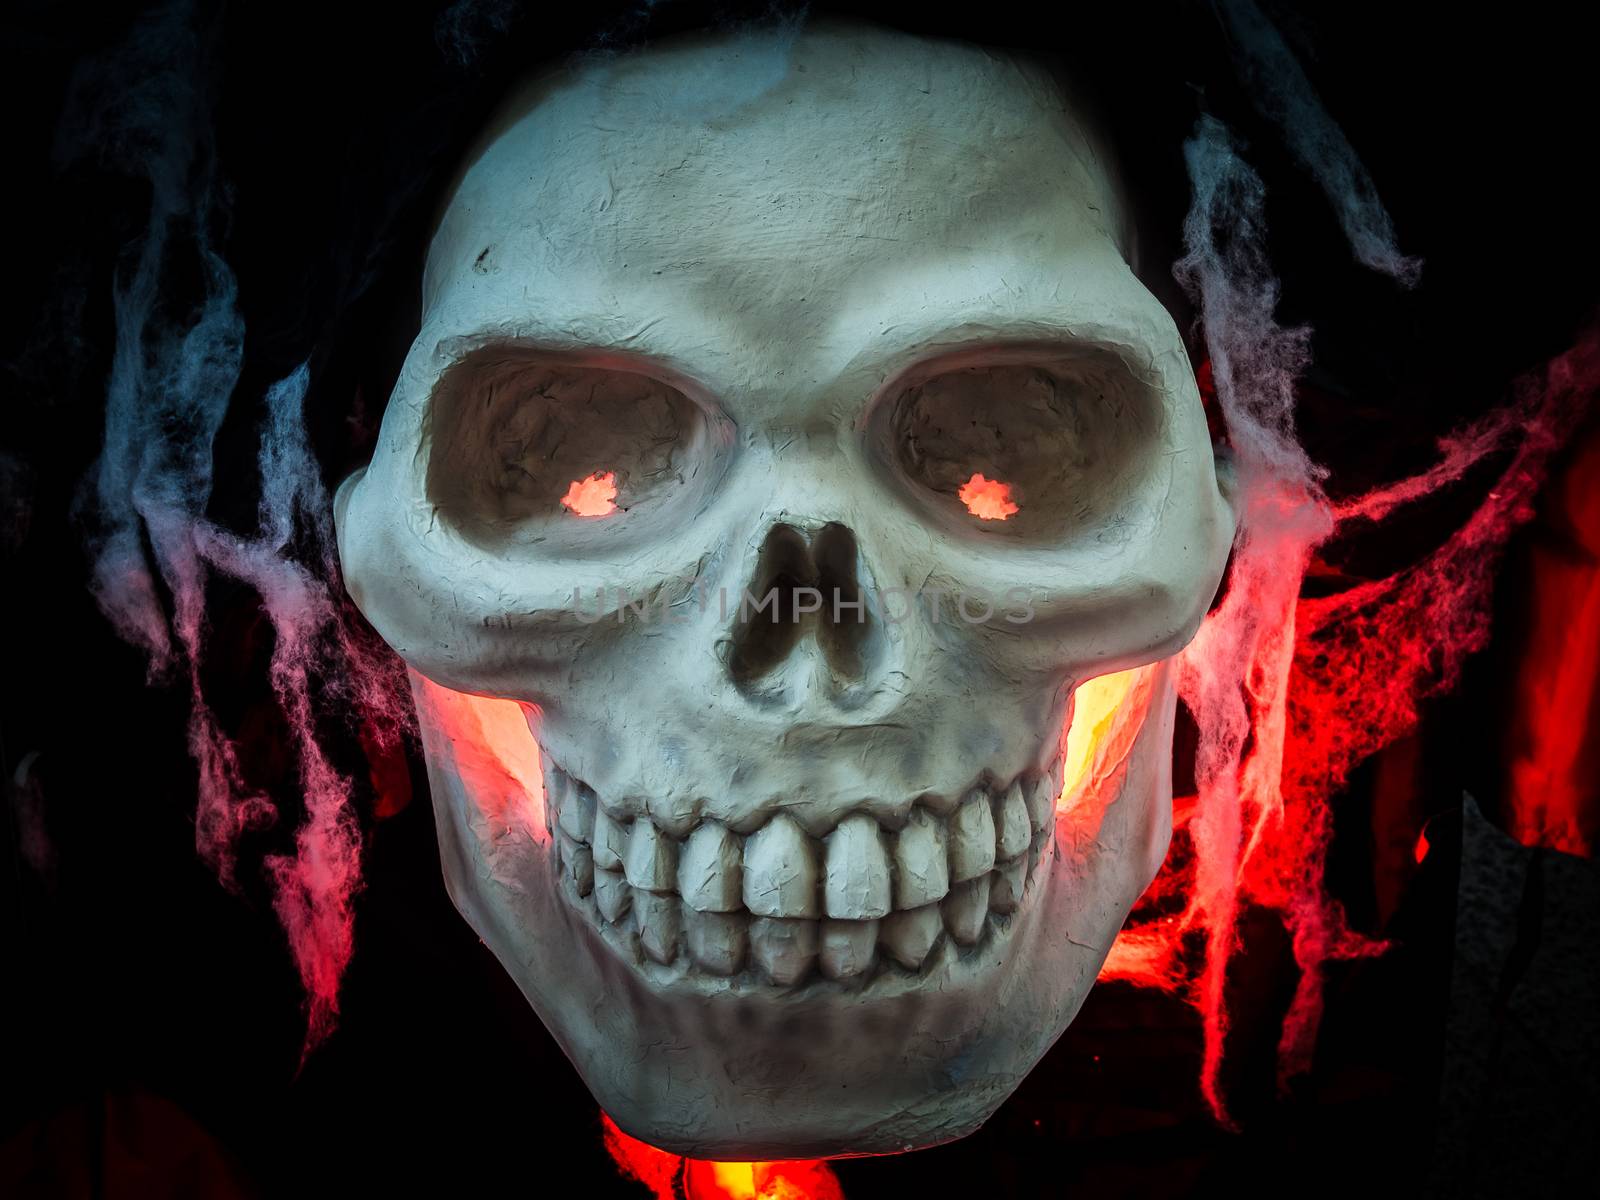 Scary Halloween skull bones with red light